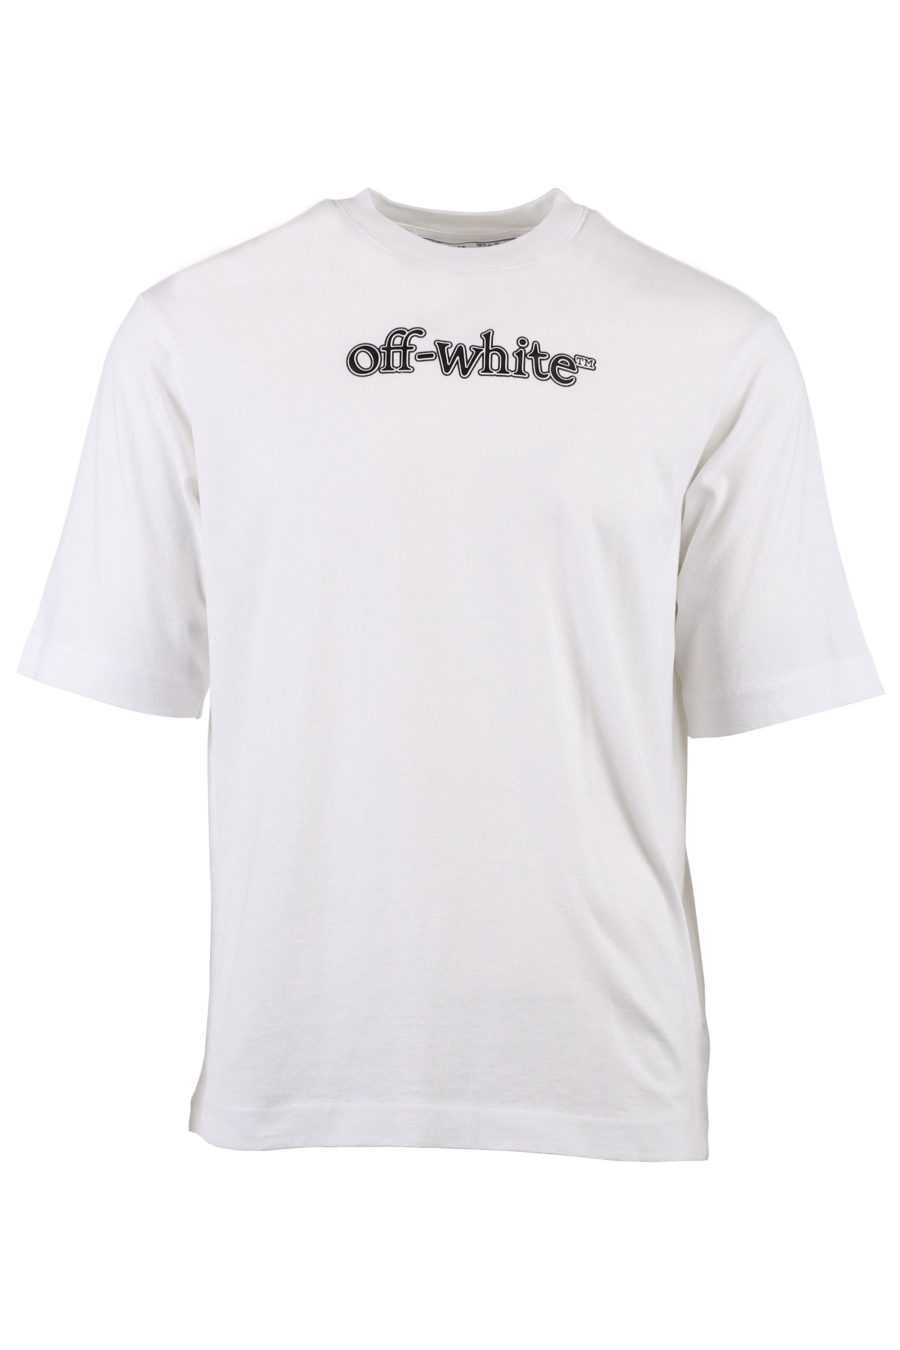 Camiseta blanca con logo negro y blanco - IMG 1354 m